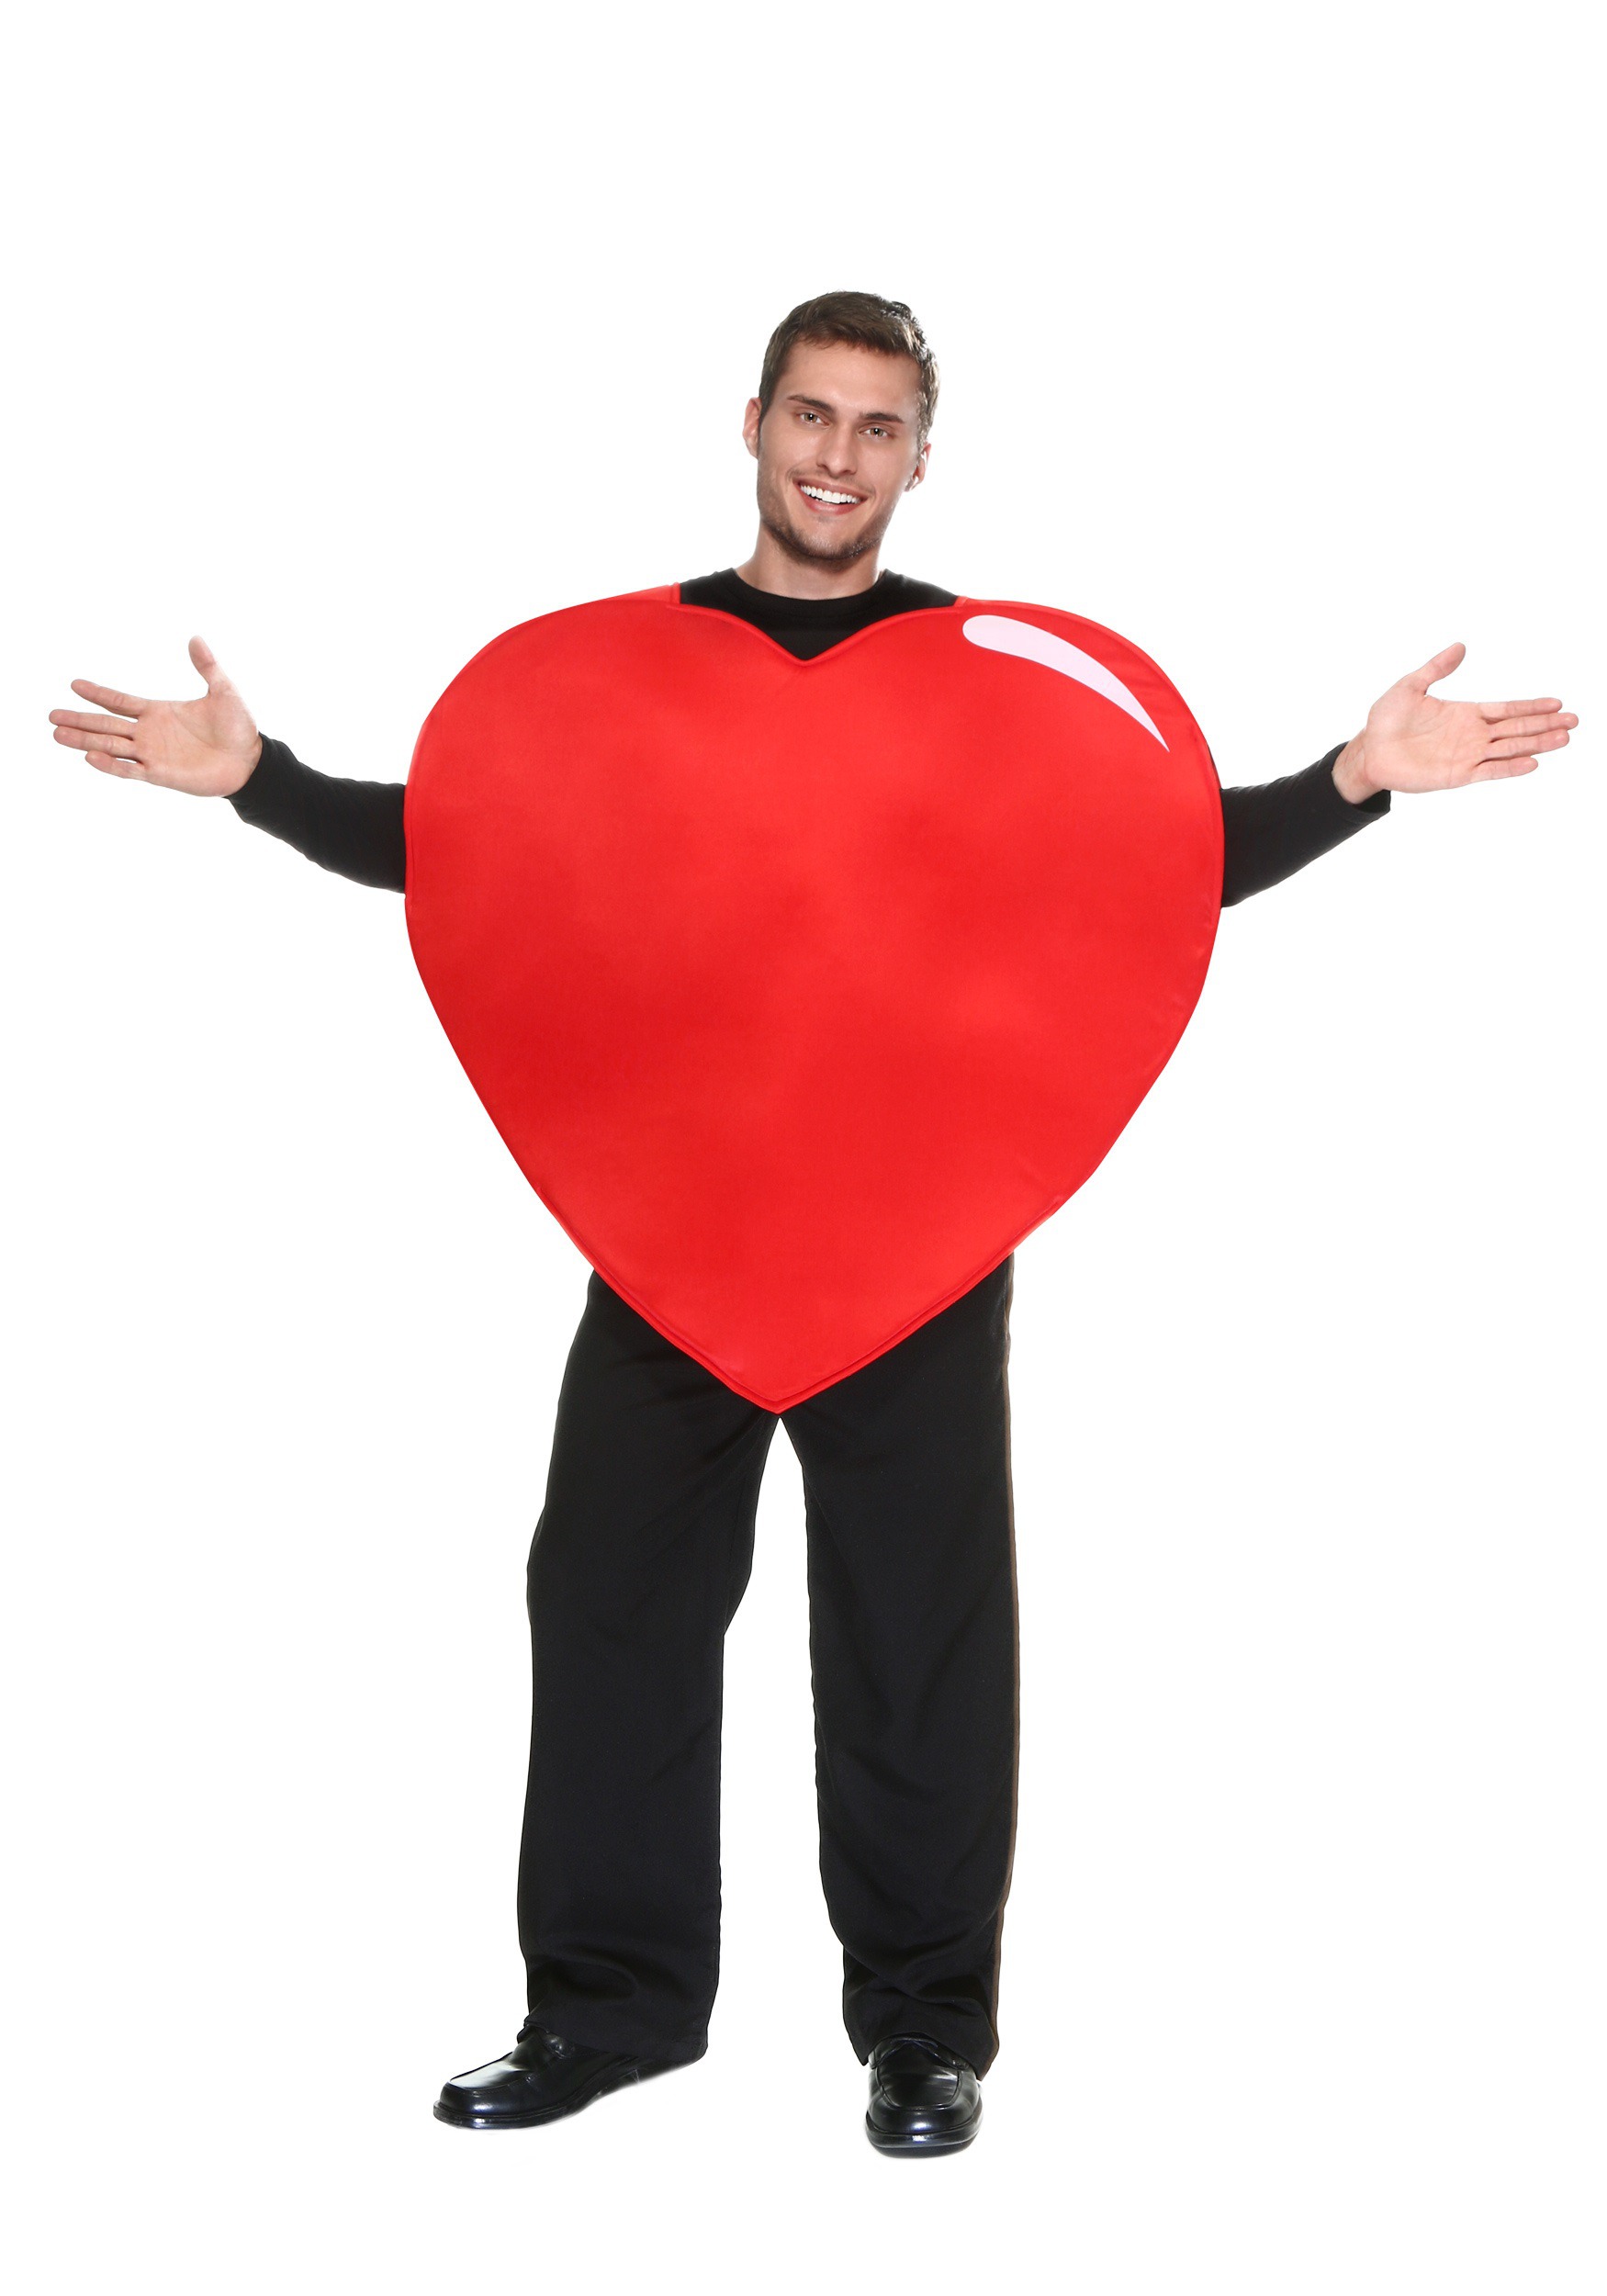 Adult Heart Costume